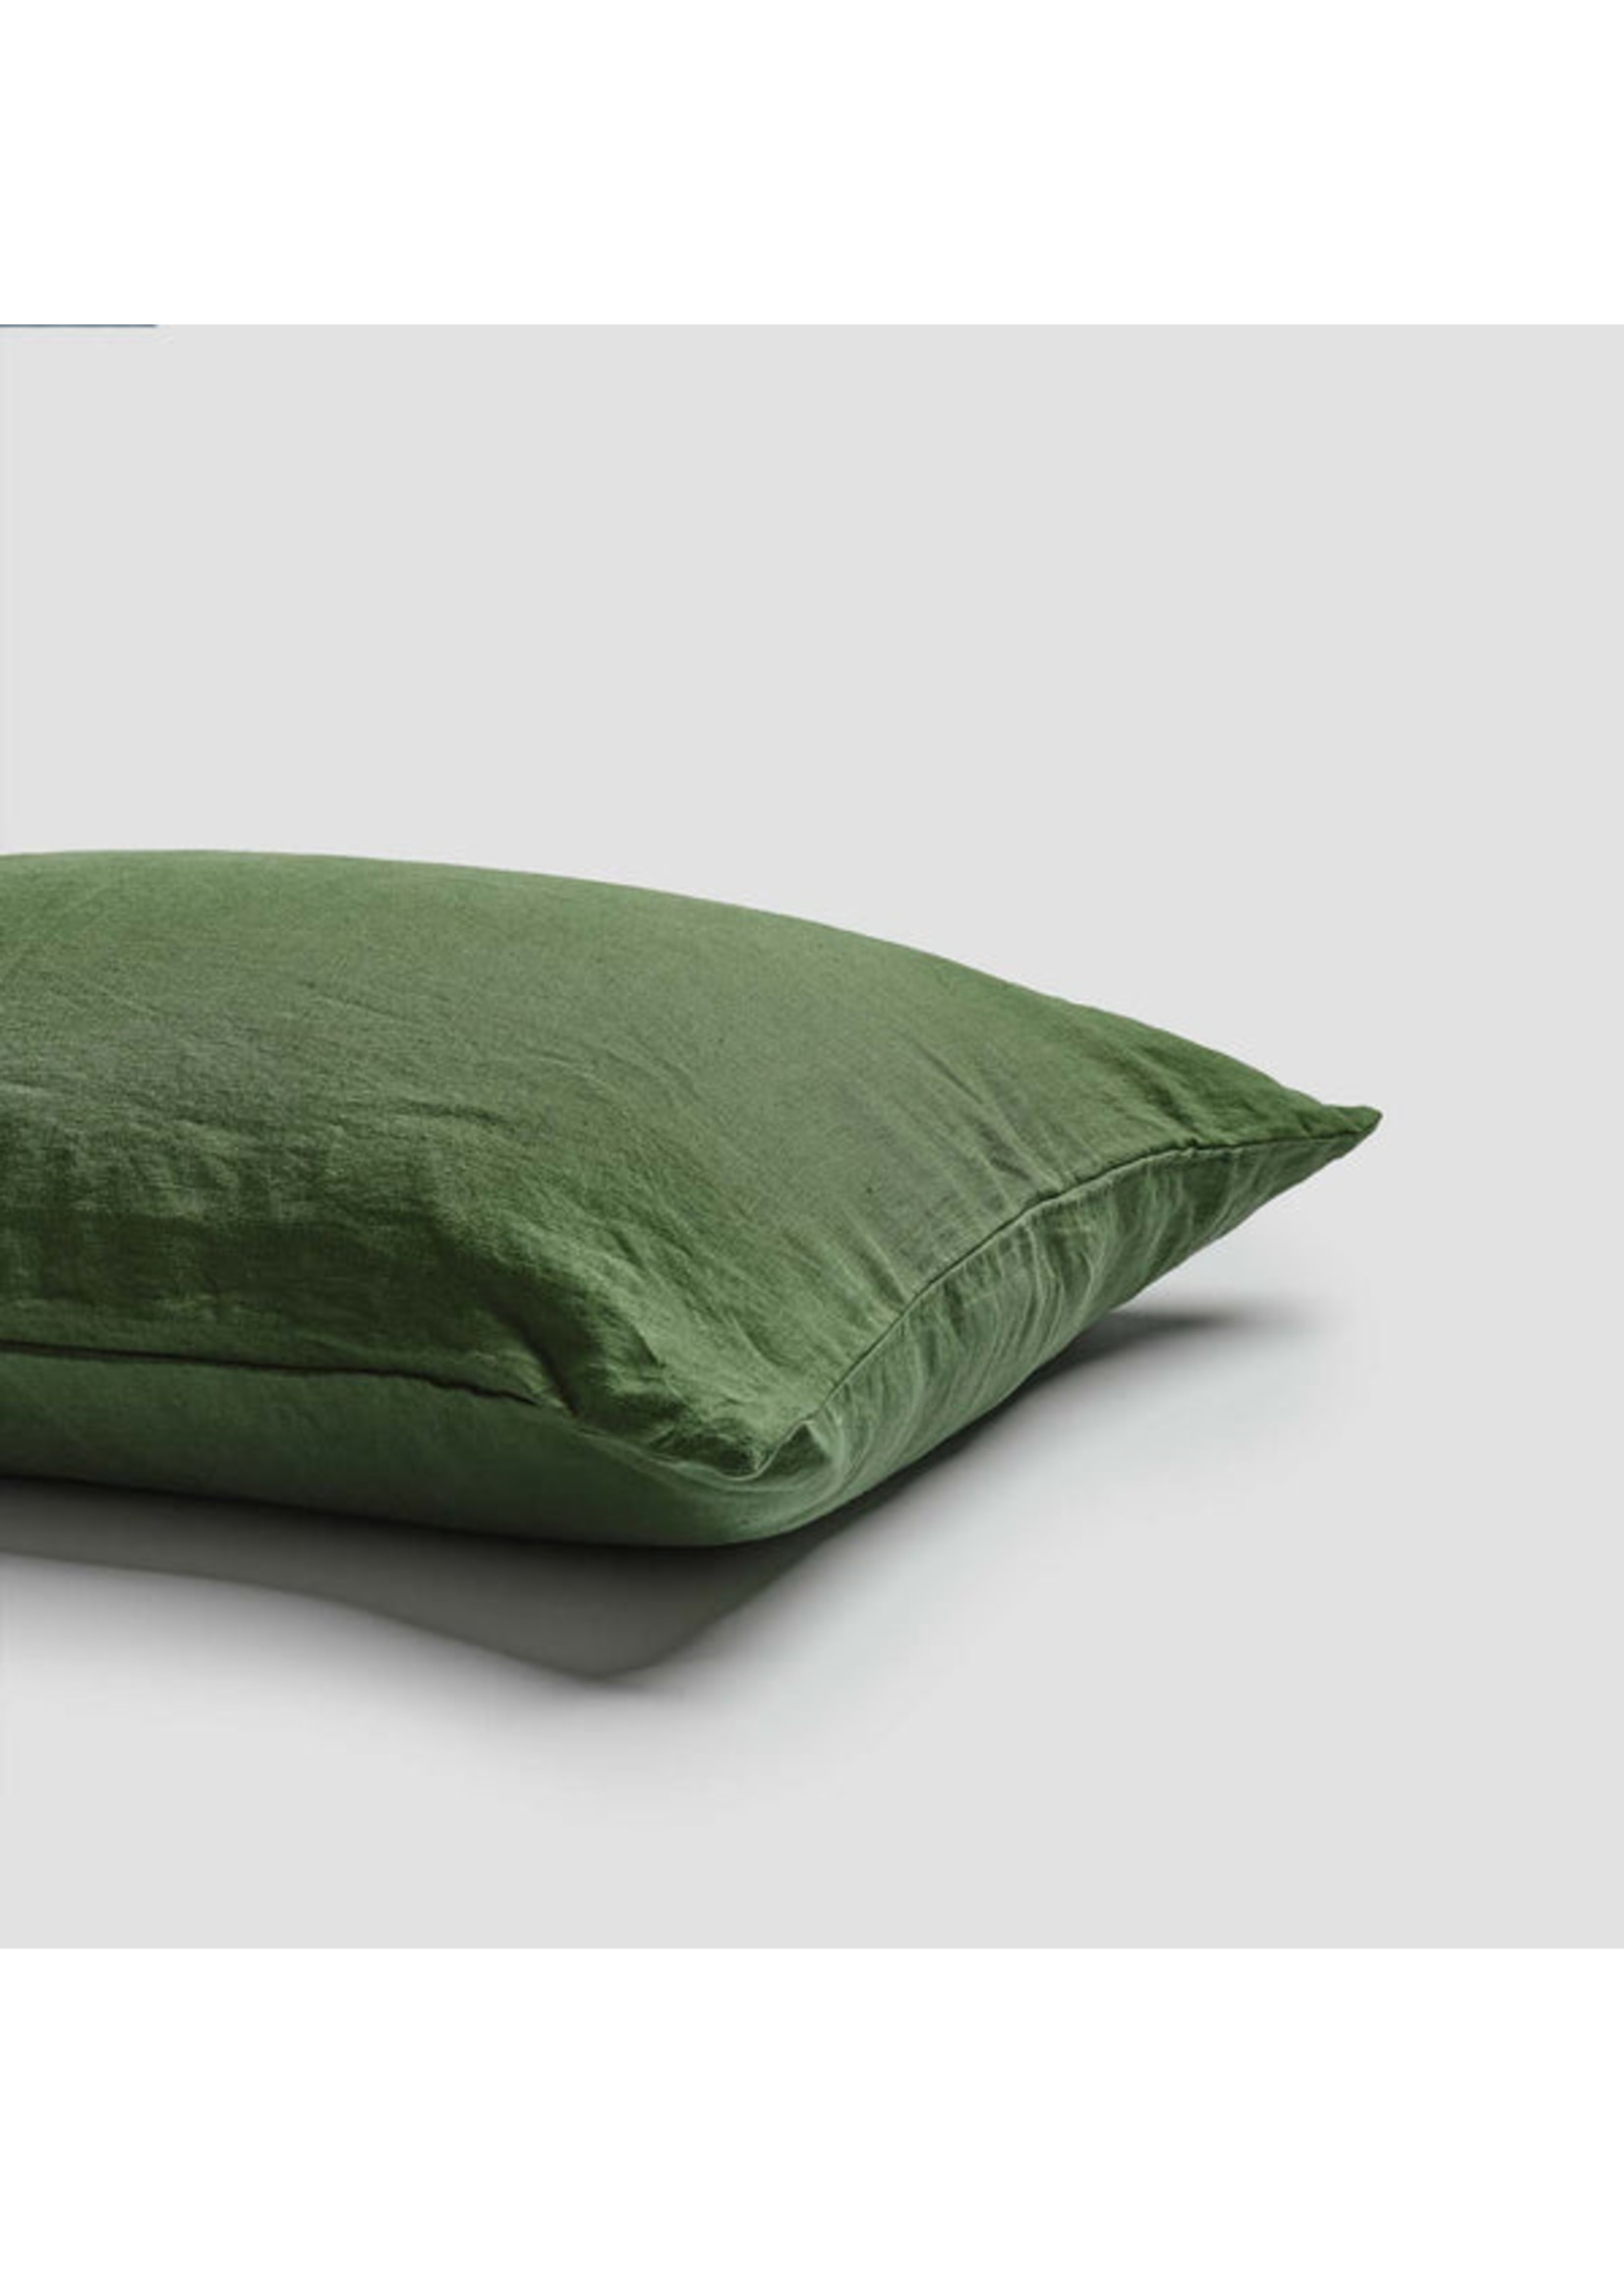 Forest green pillowcase pair KG